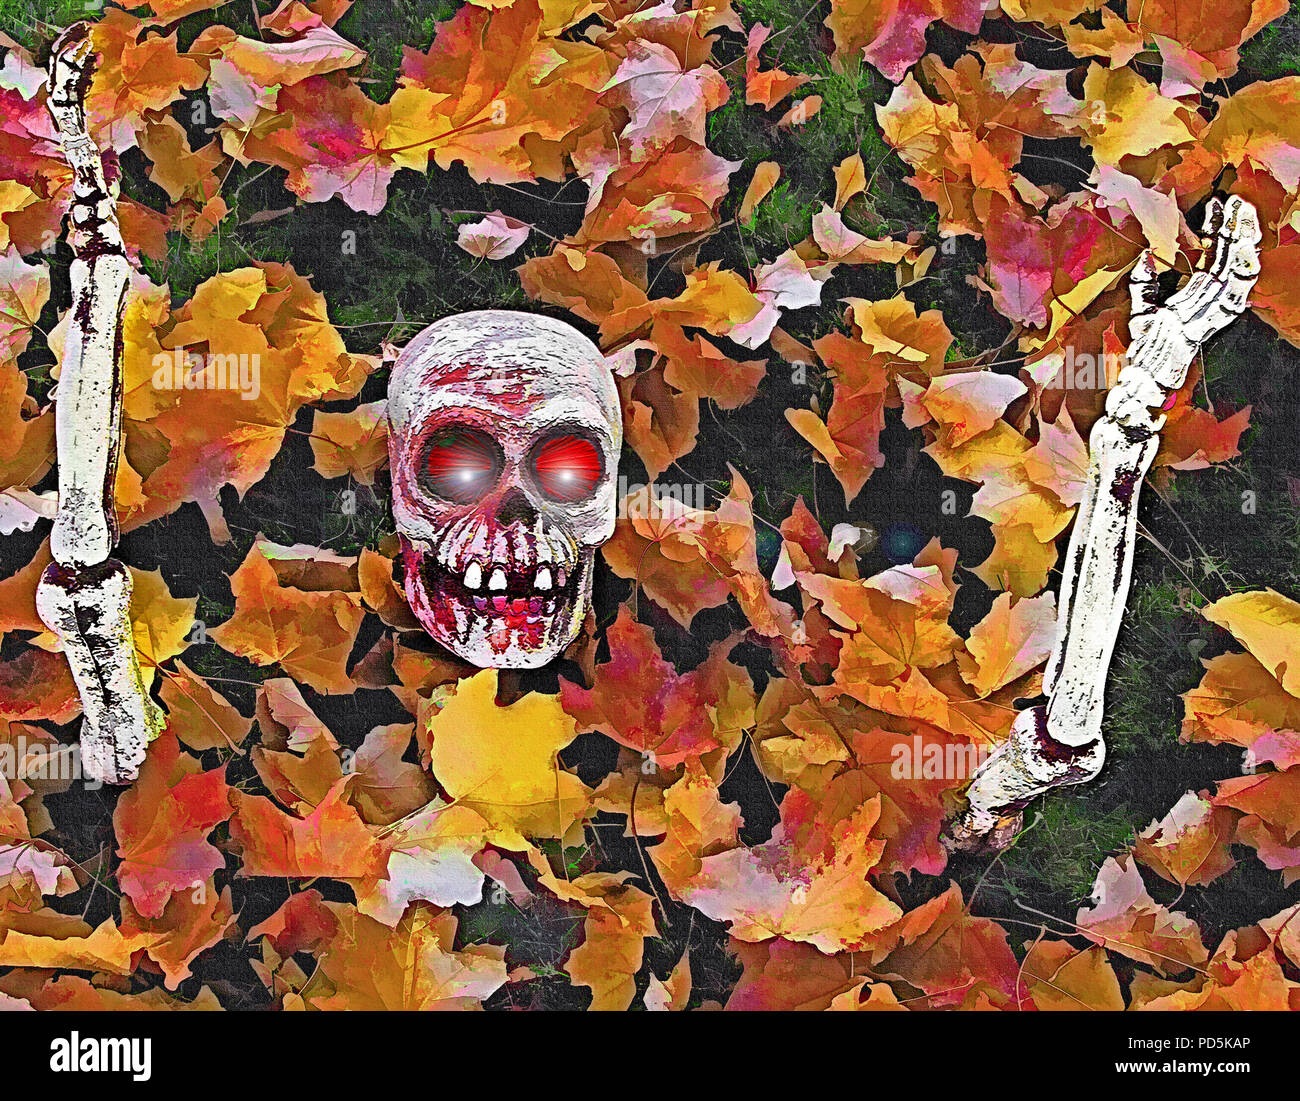 A fun Halloween and seasonal October image. Original photograph of some 'spooky' yard decor, befitting the season, has been digitally altered and enha Stock Photo